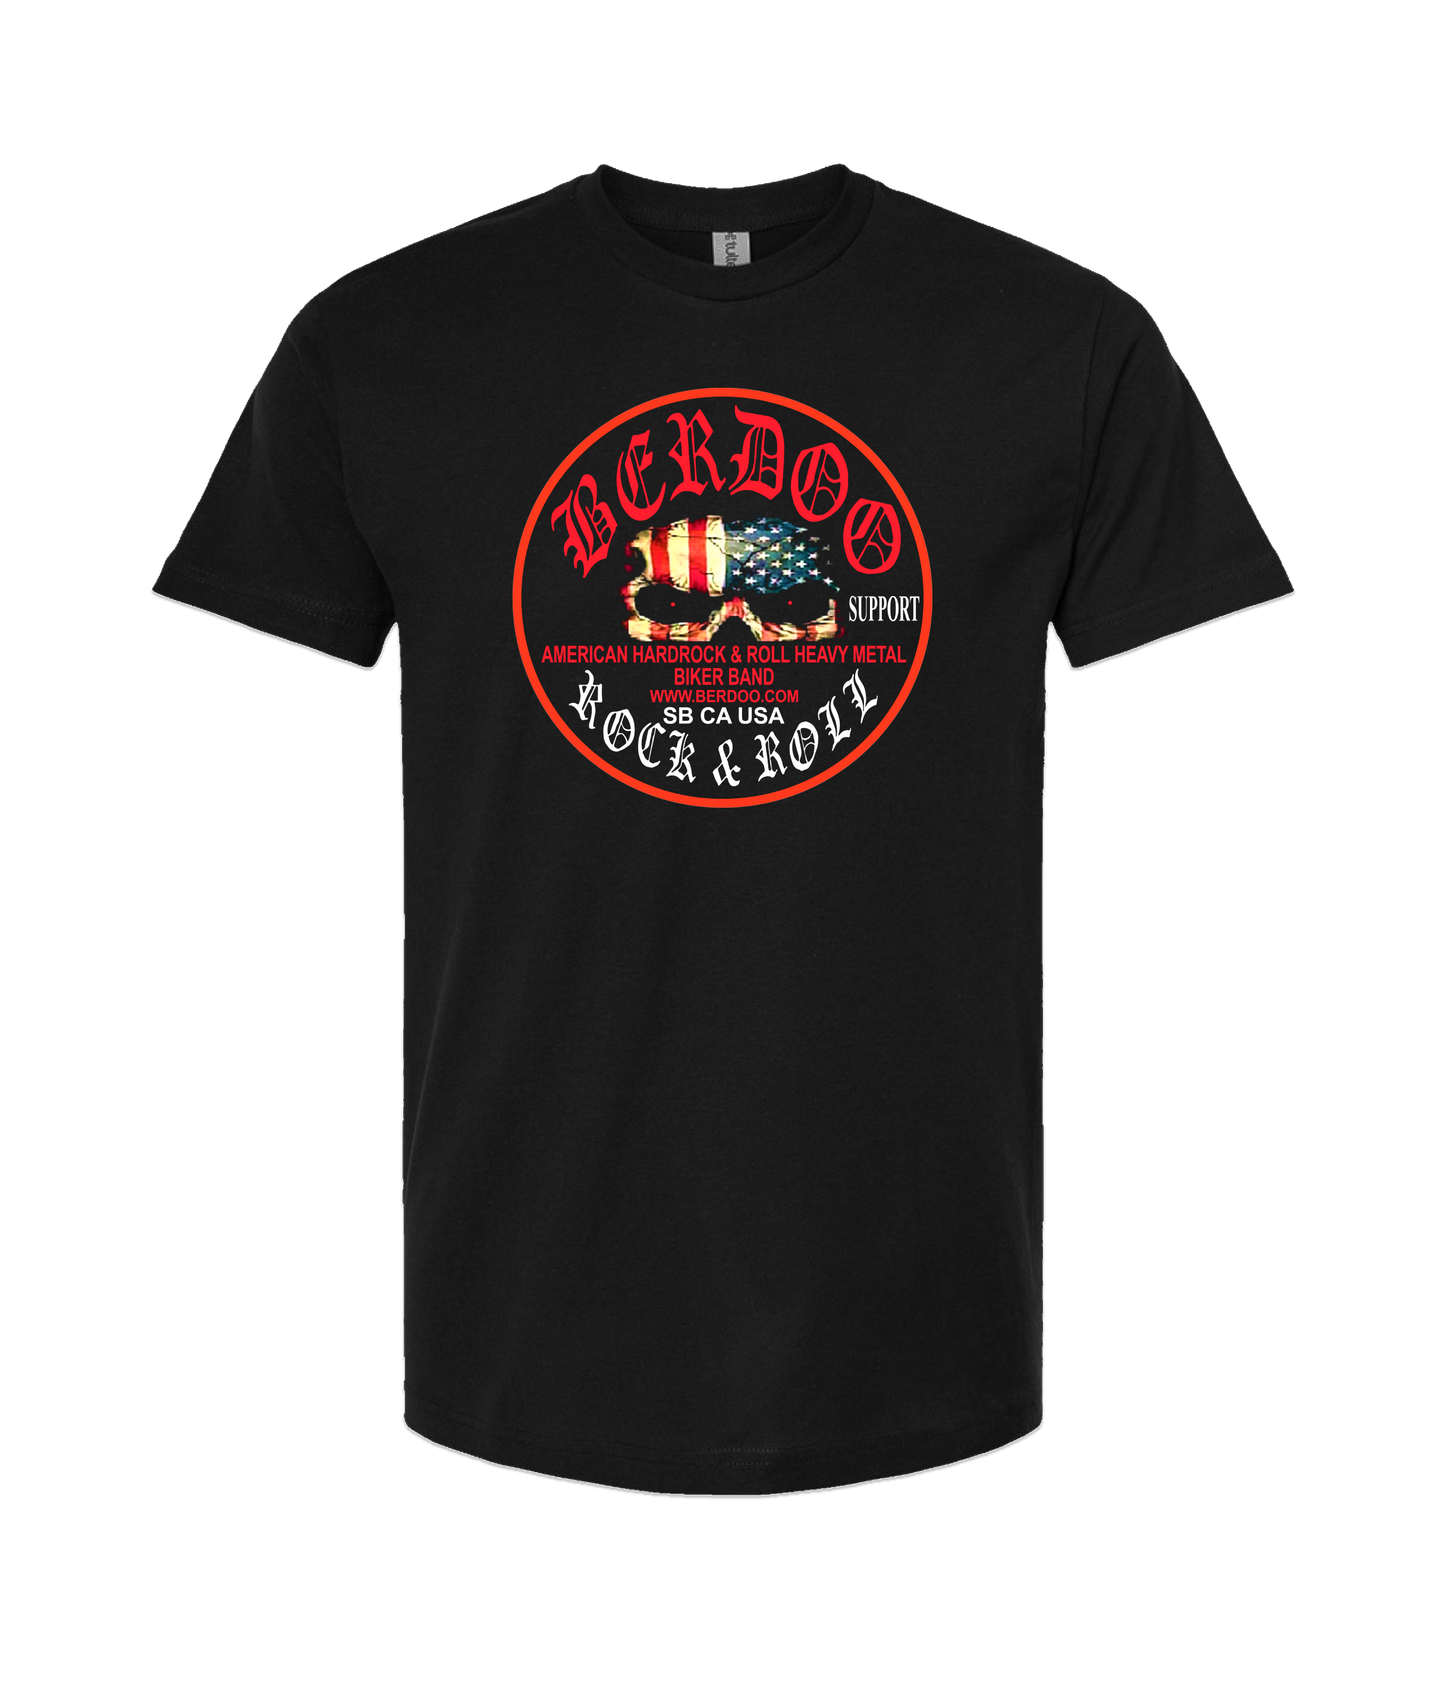 BERDOO BAND SUPPORT GEAR - Logo (red) - Black T-Shirt